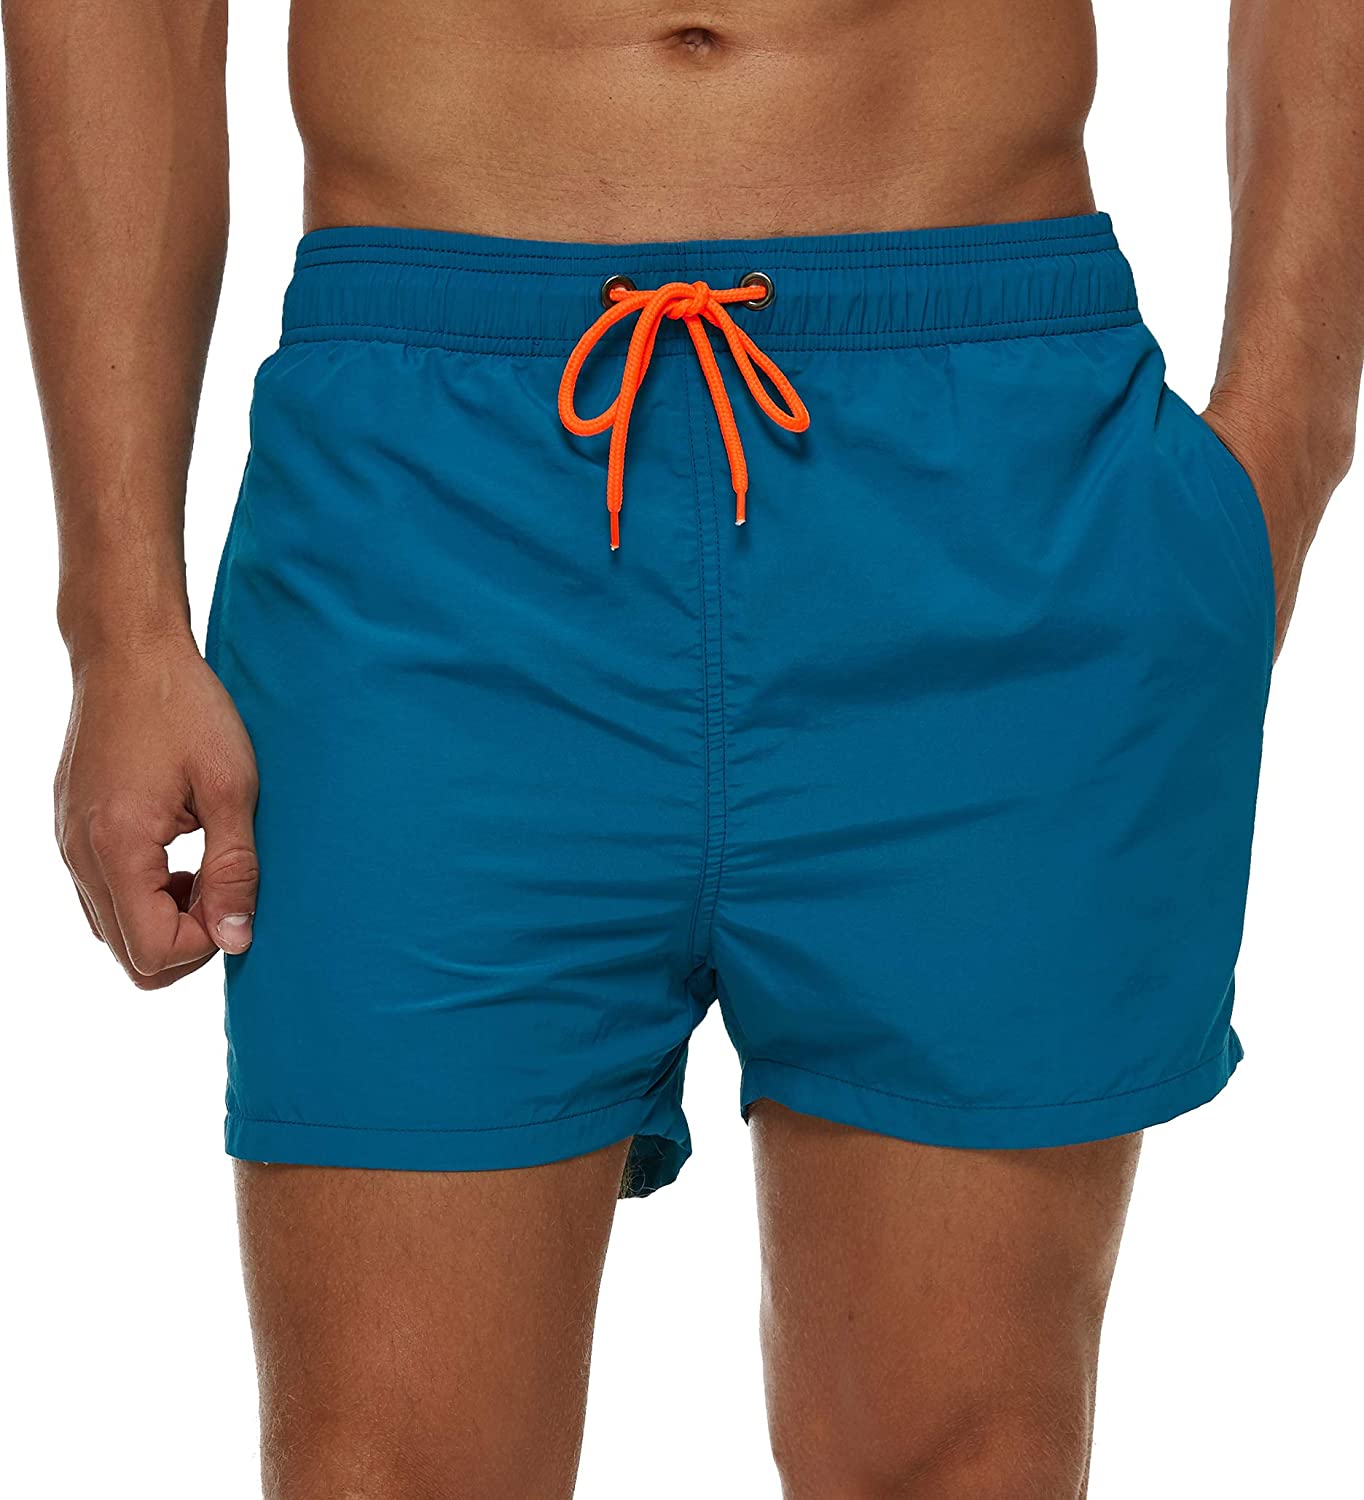 SILKWORLD Men's Swim Trunks with Zipper Pockets 5 Swimsuit Quick Dry Shorts